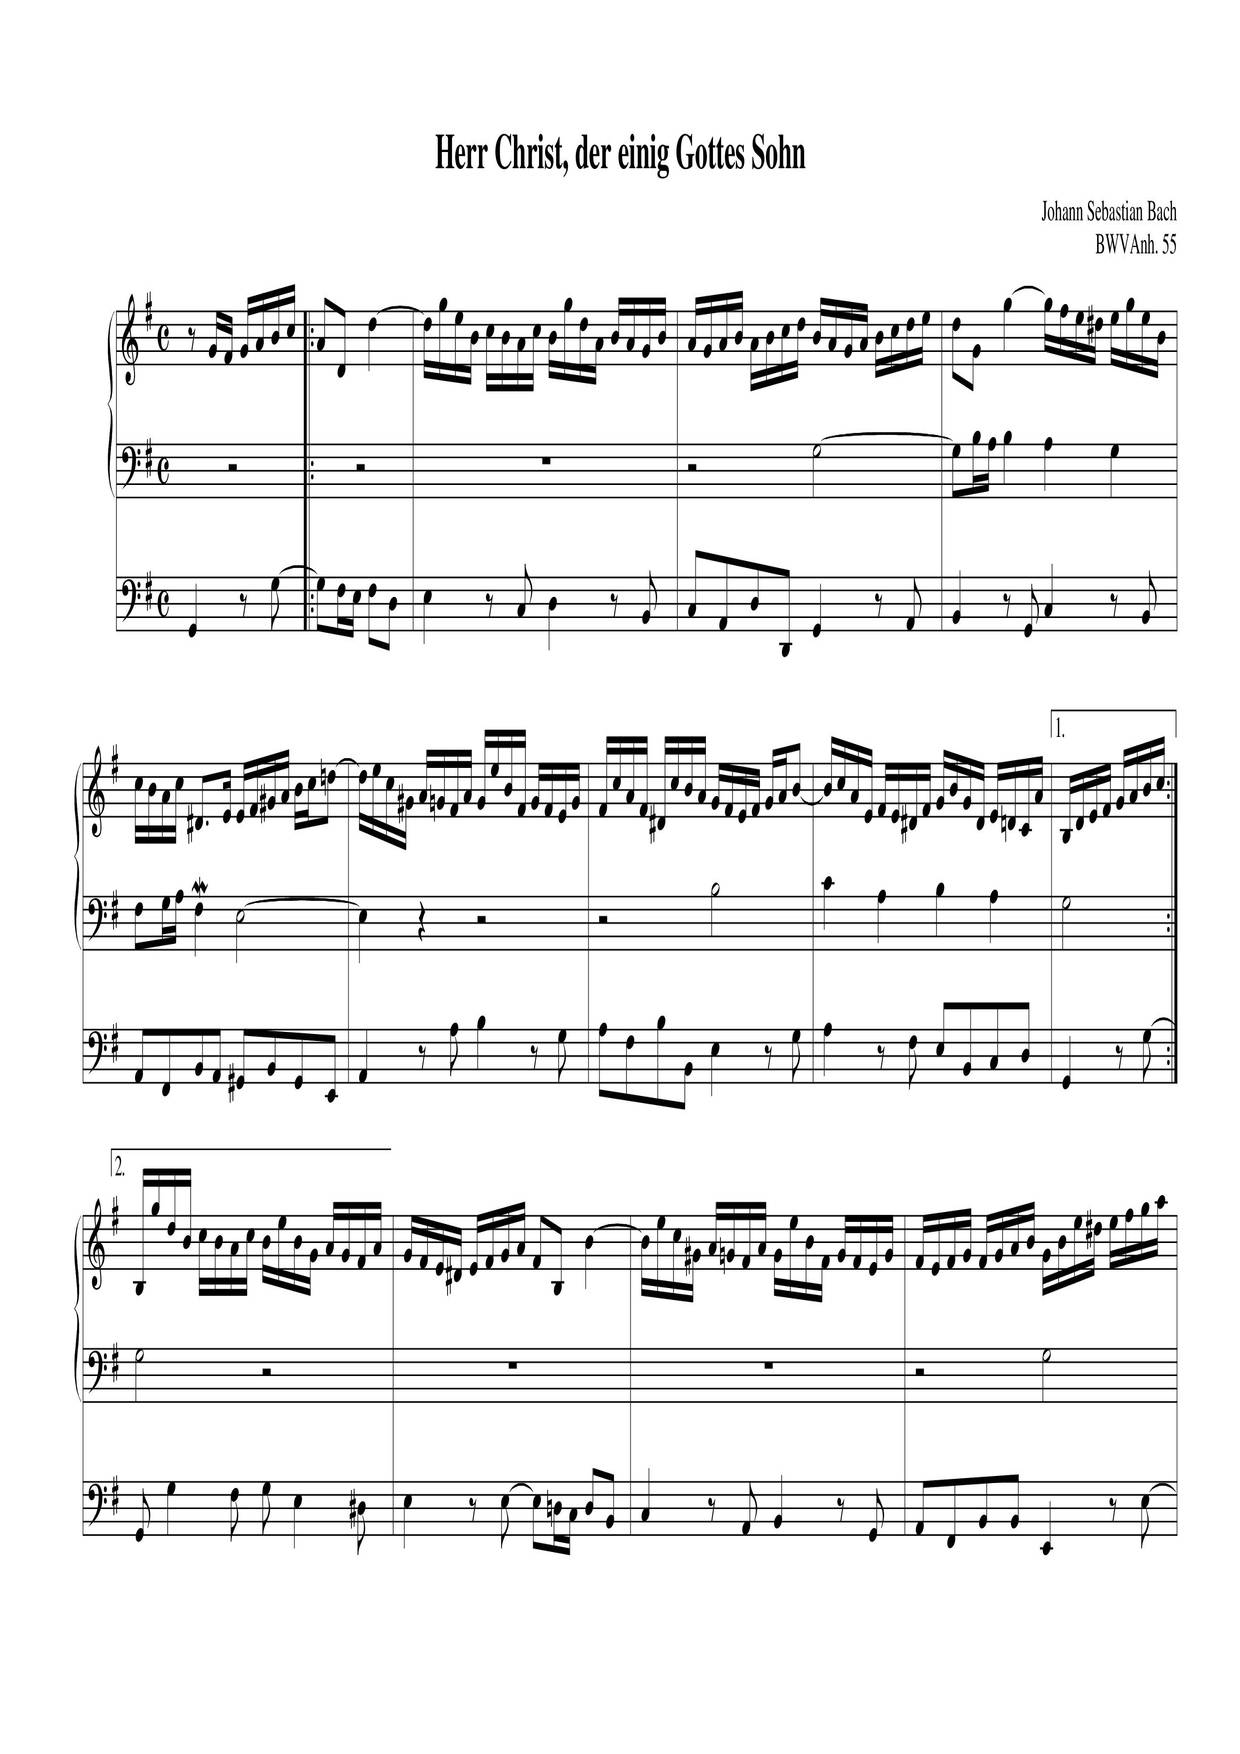 Herr Christ, Der Einge Gottessohn, BWV Anh. 55 Score